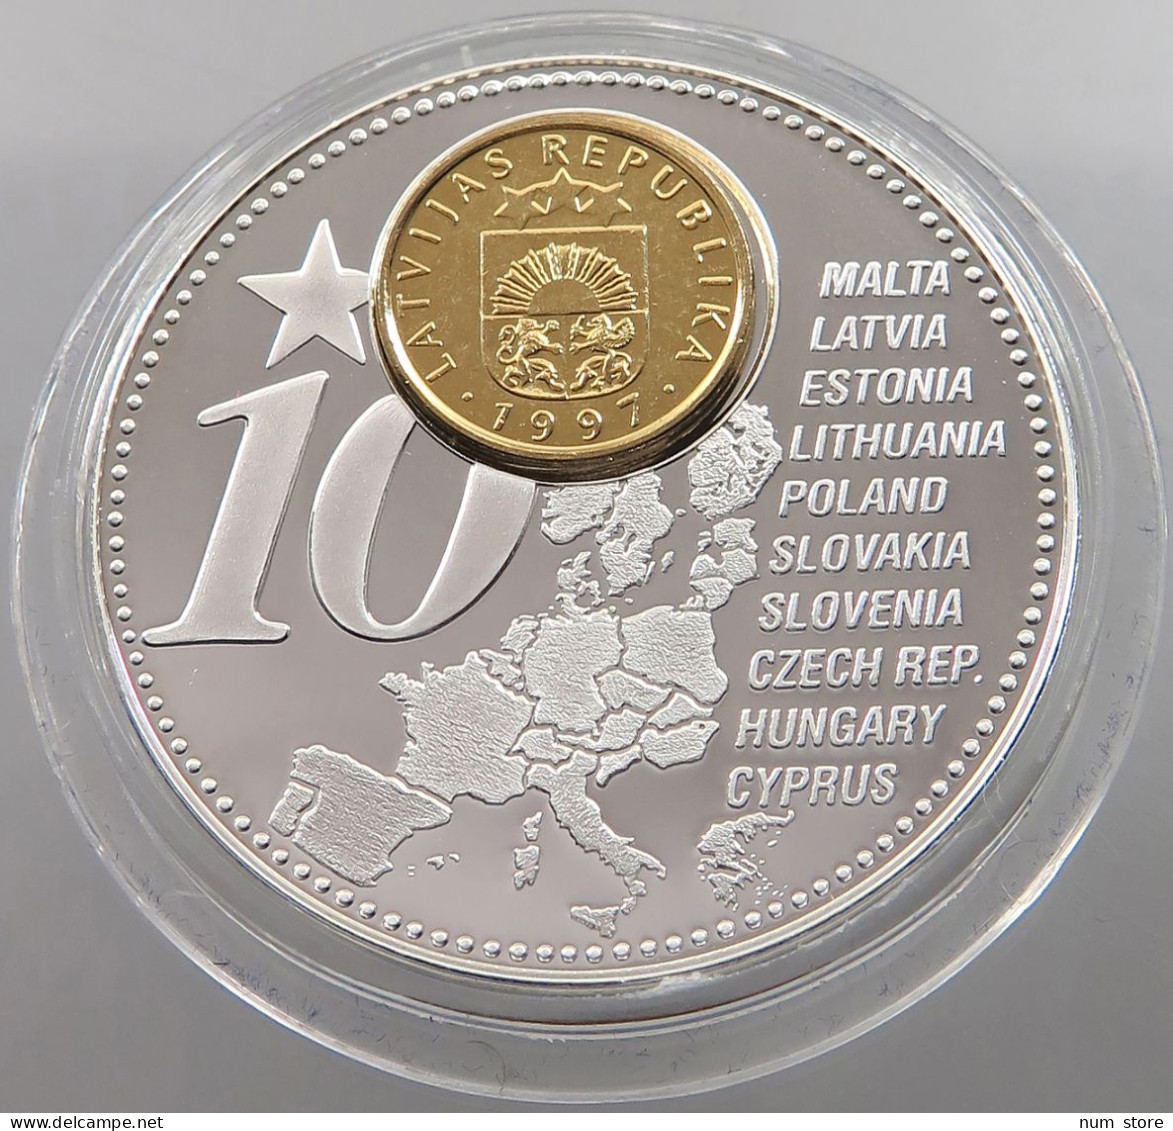 LATVIA MEDAL 2006 THE FORTHCOMING NEW EURO COUNTRIES #sm06 0687 - Latvia